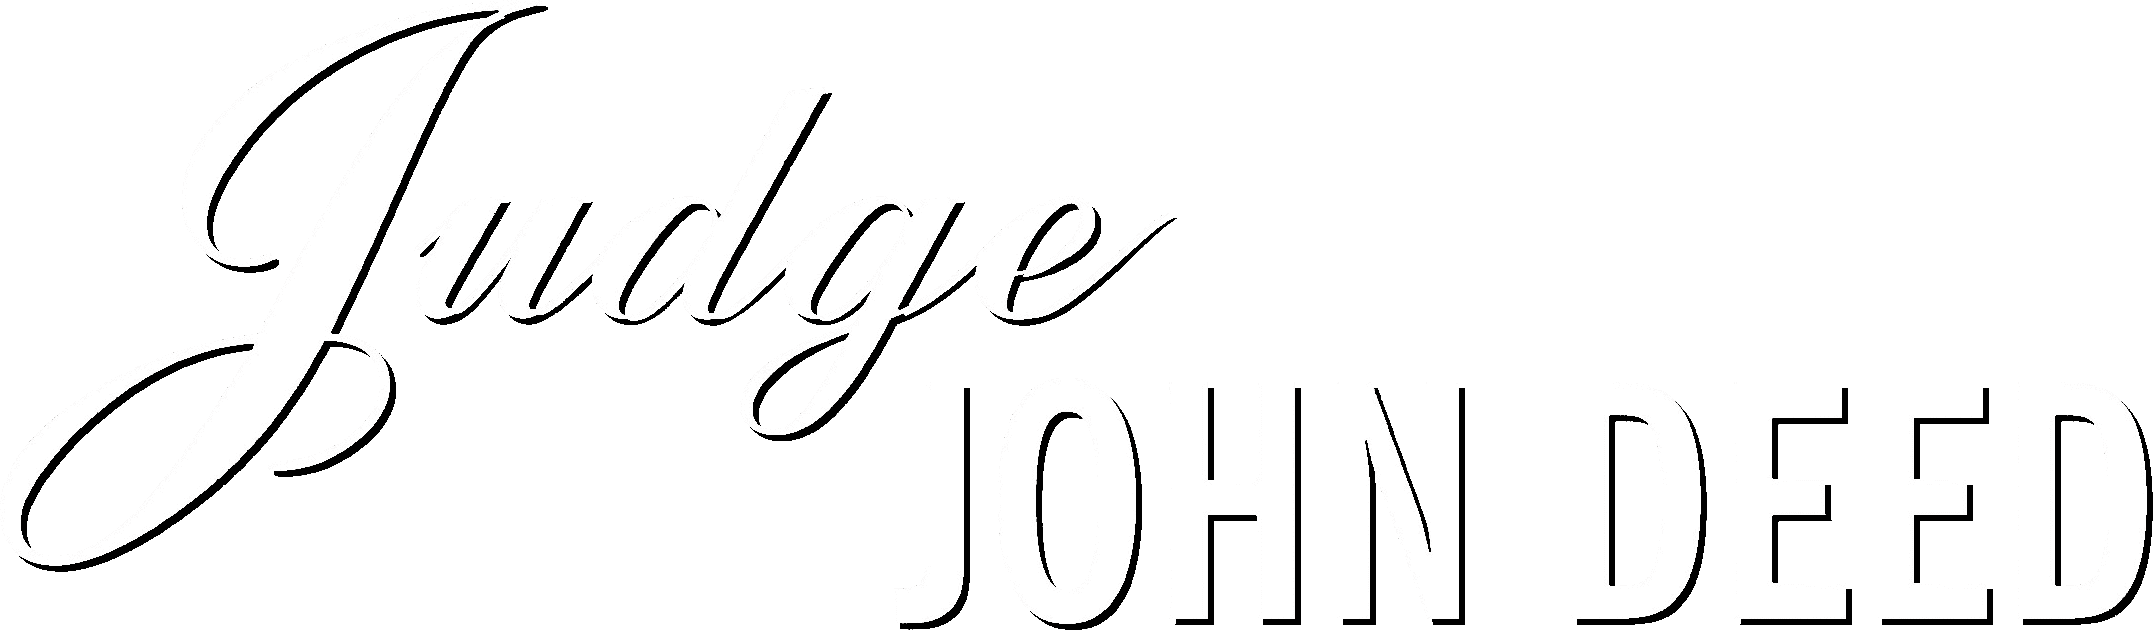 Judge John Deed logo